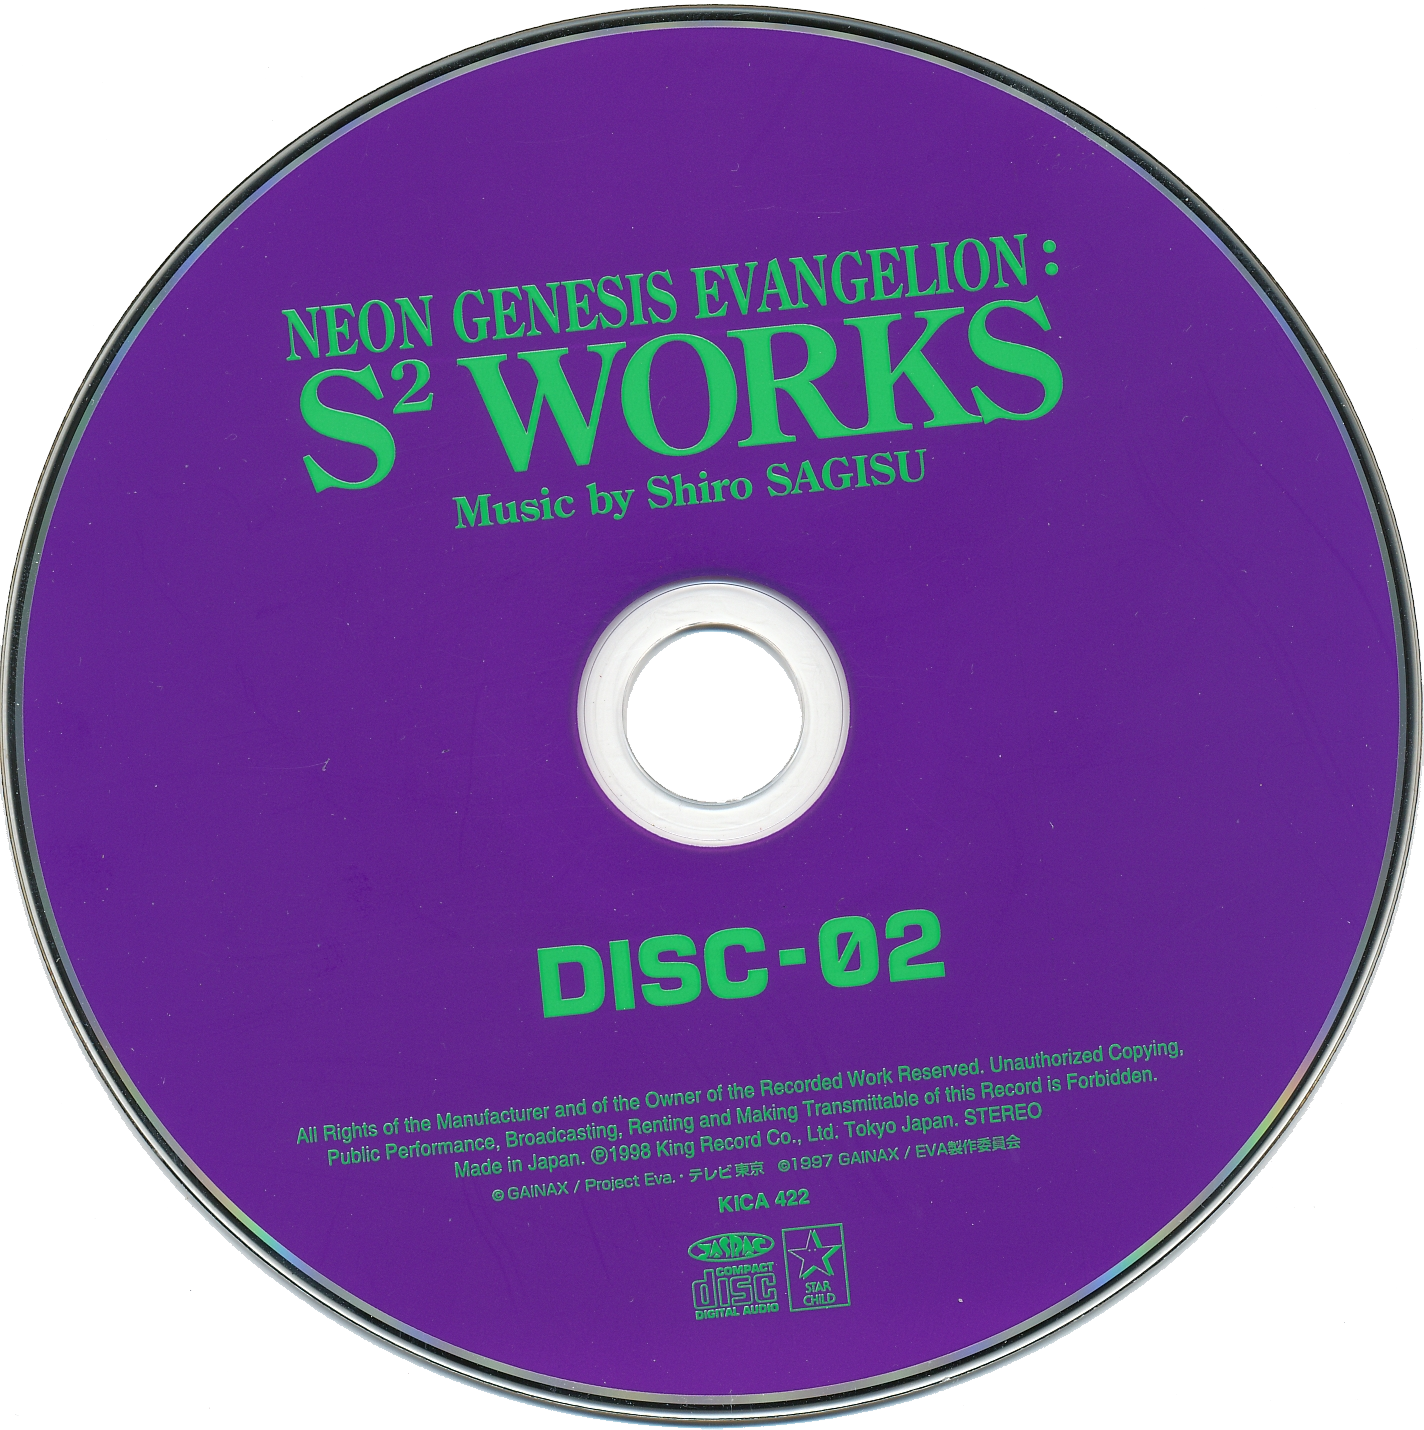 CD/DVD, compact disc